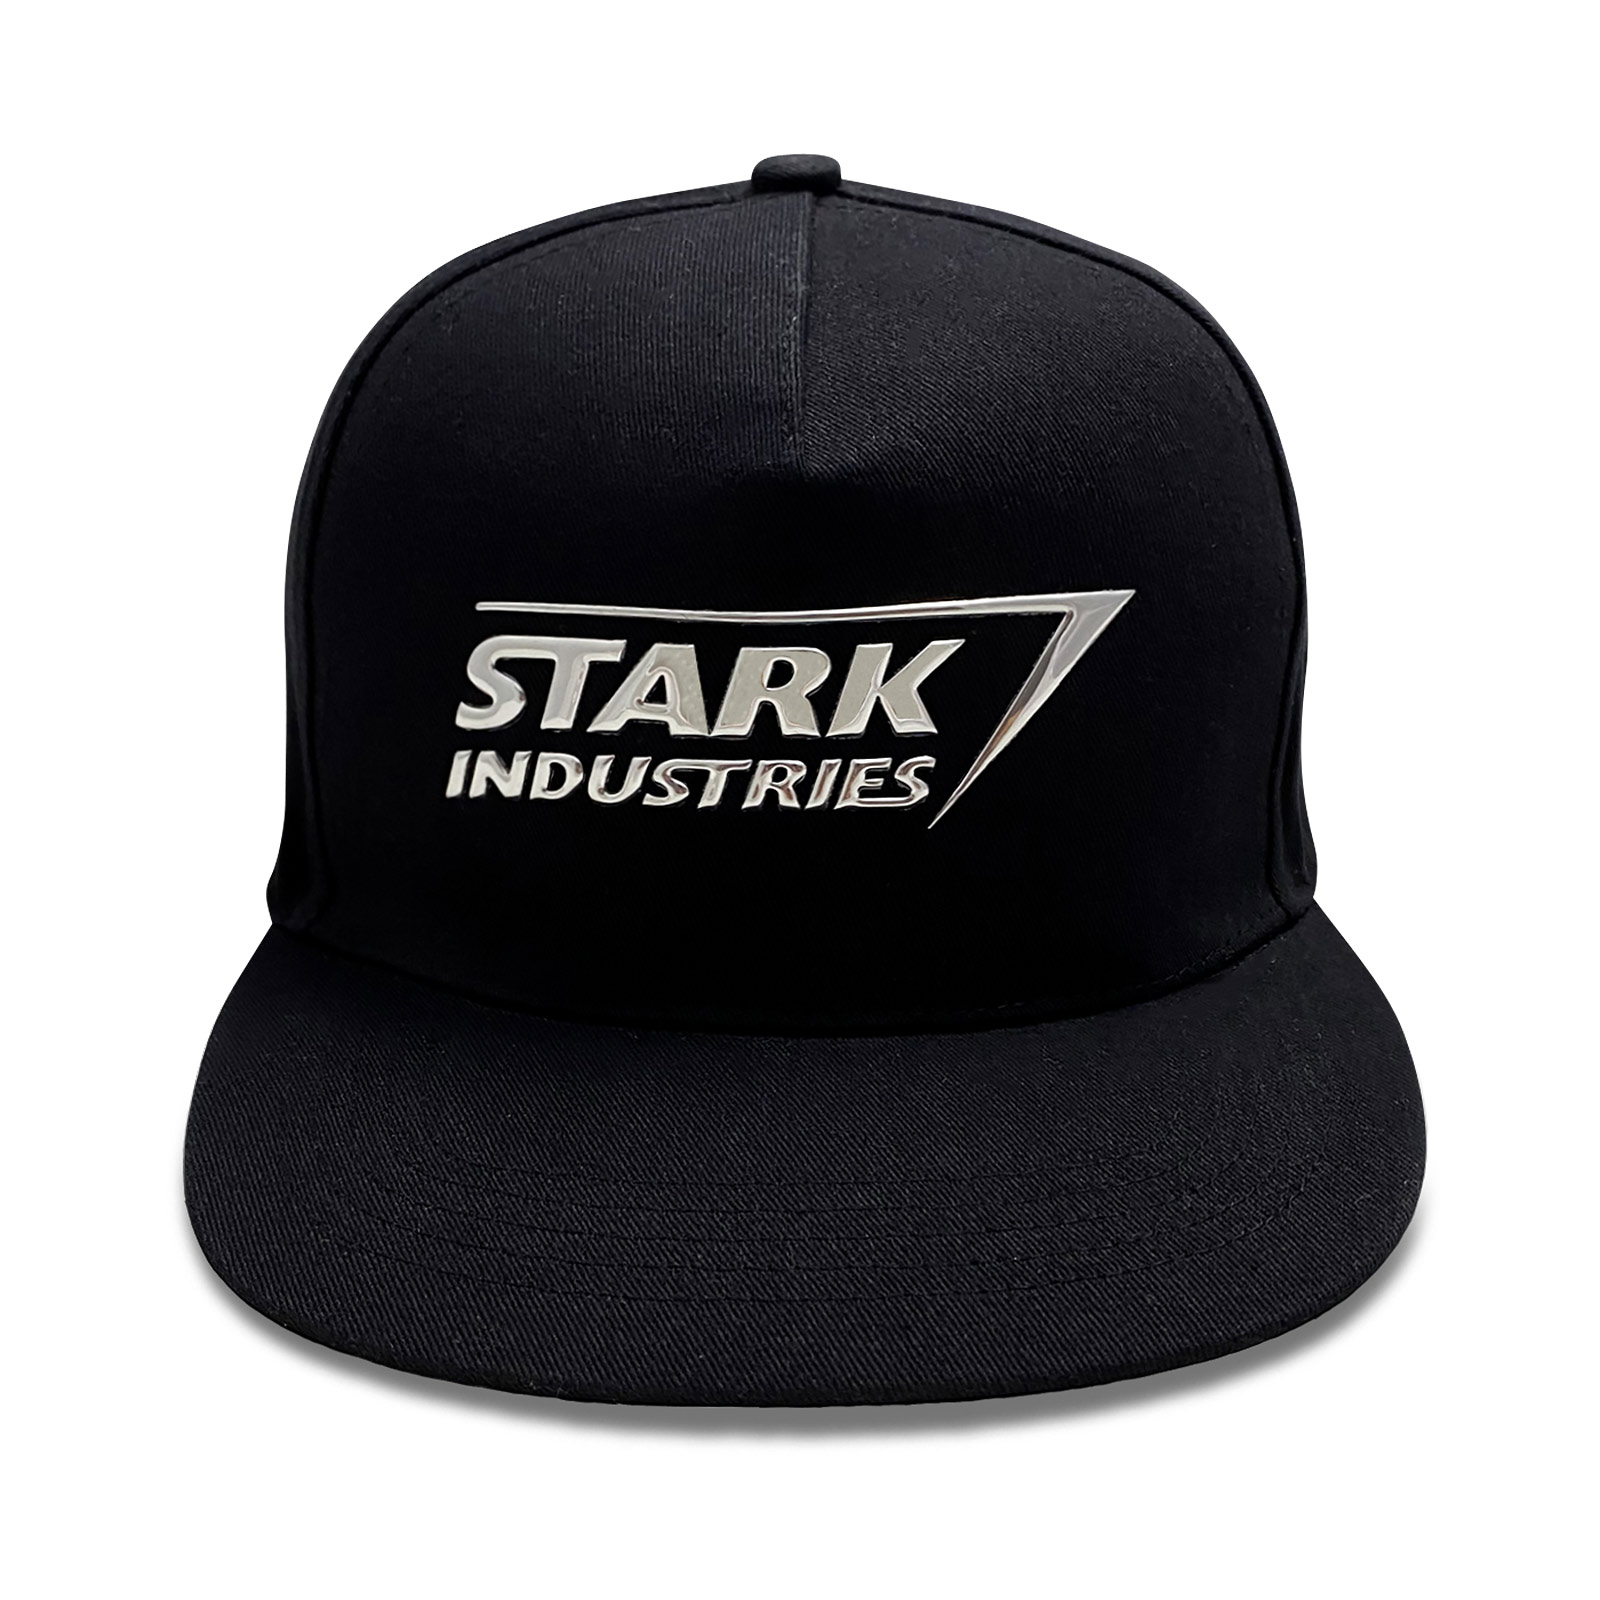 Iron Man - Stark Industries Snapback Cap Black